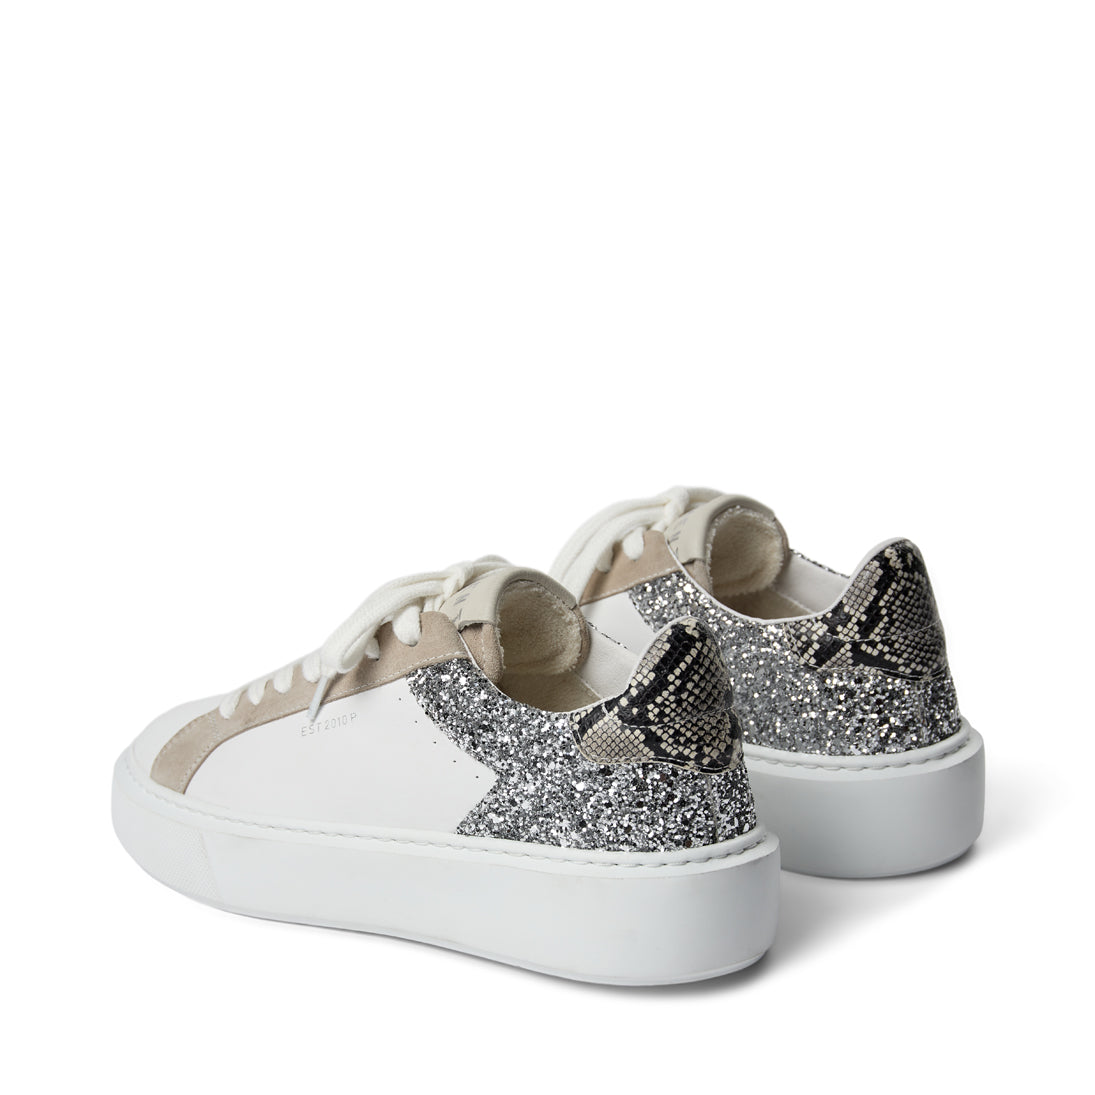 Pavement Frances Sneakers White/silver glitter 703